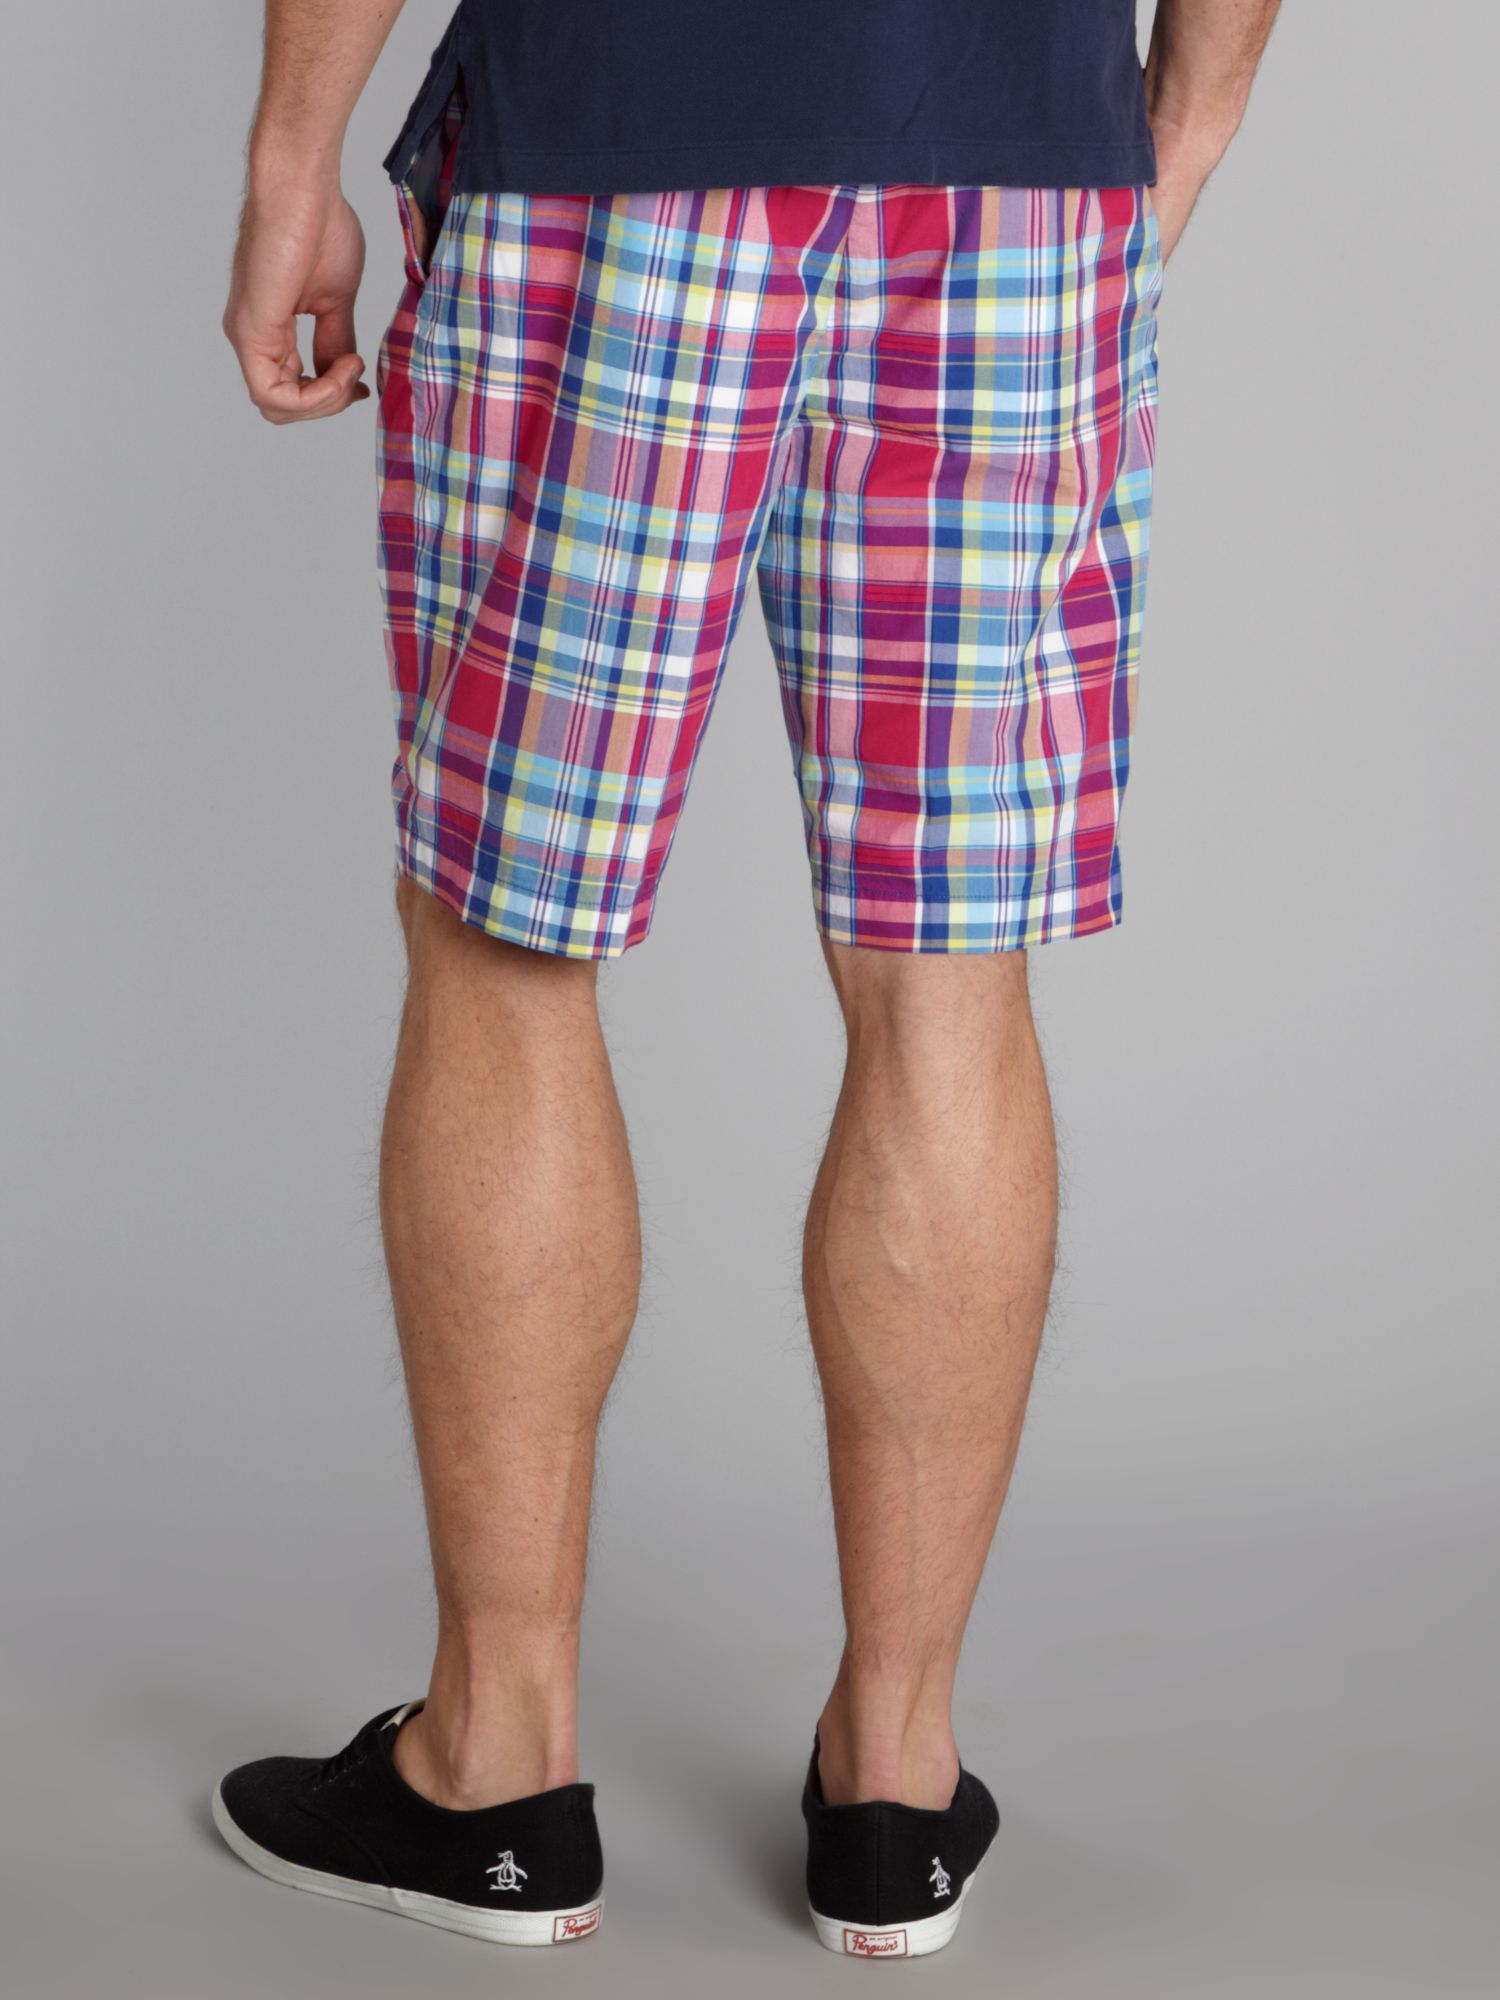 Ralph lauren golf Madras Check Shorts in Pink for Men | Lyst